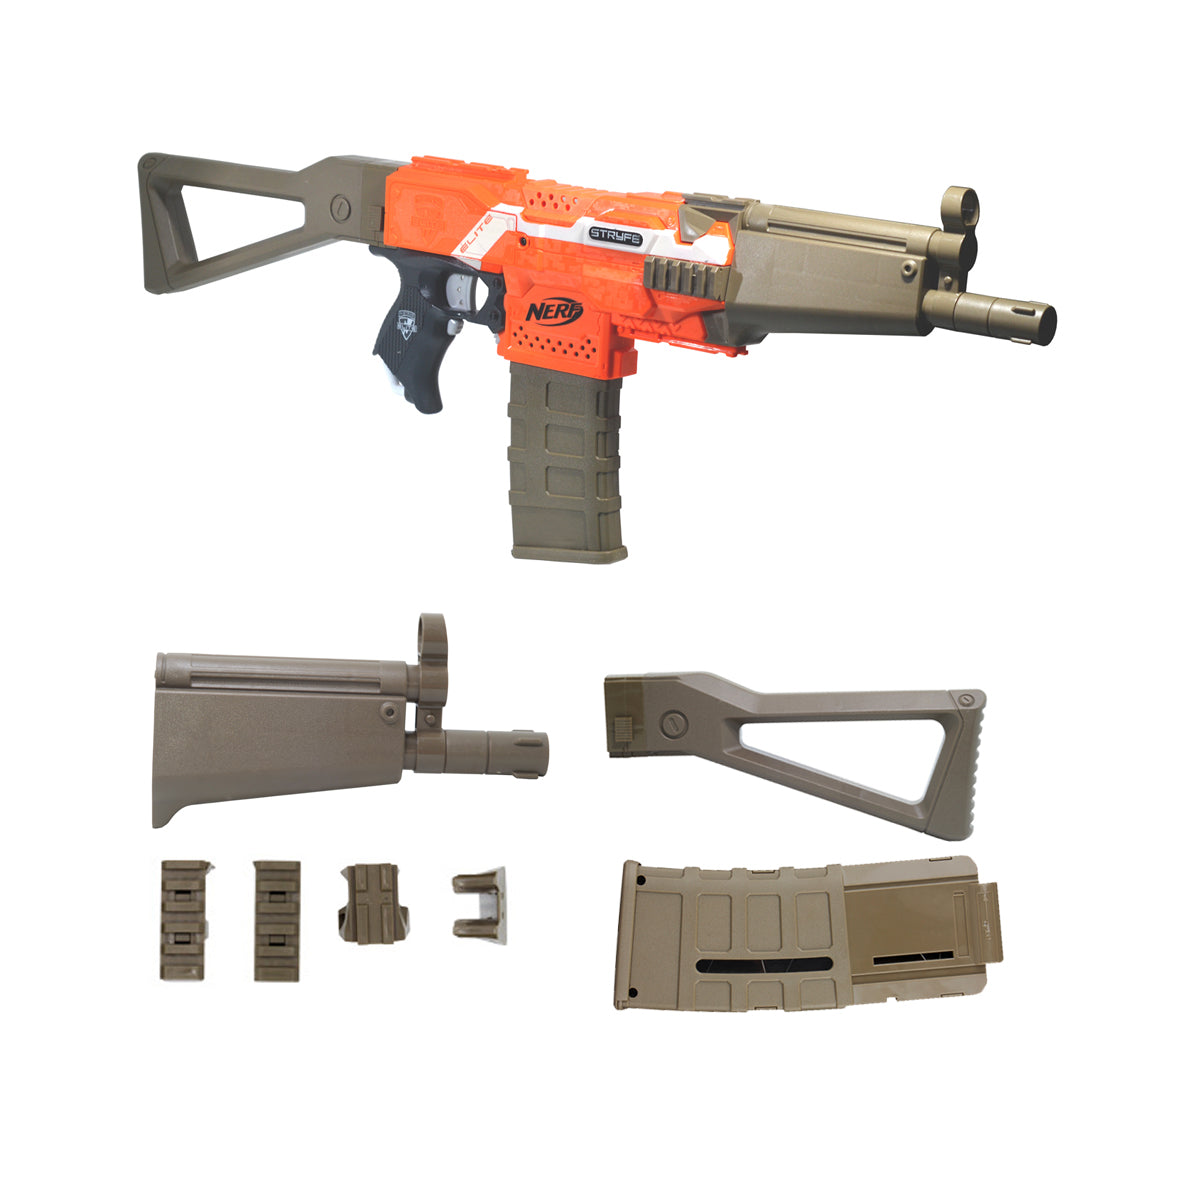 BlasterMod MP5 Imitation kits Sand Plastic Combo Item Color Sand for Nerf Stryfe Modify Toy - worker nerf